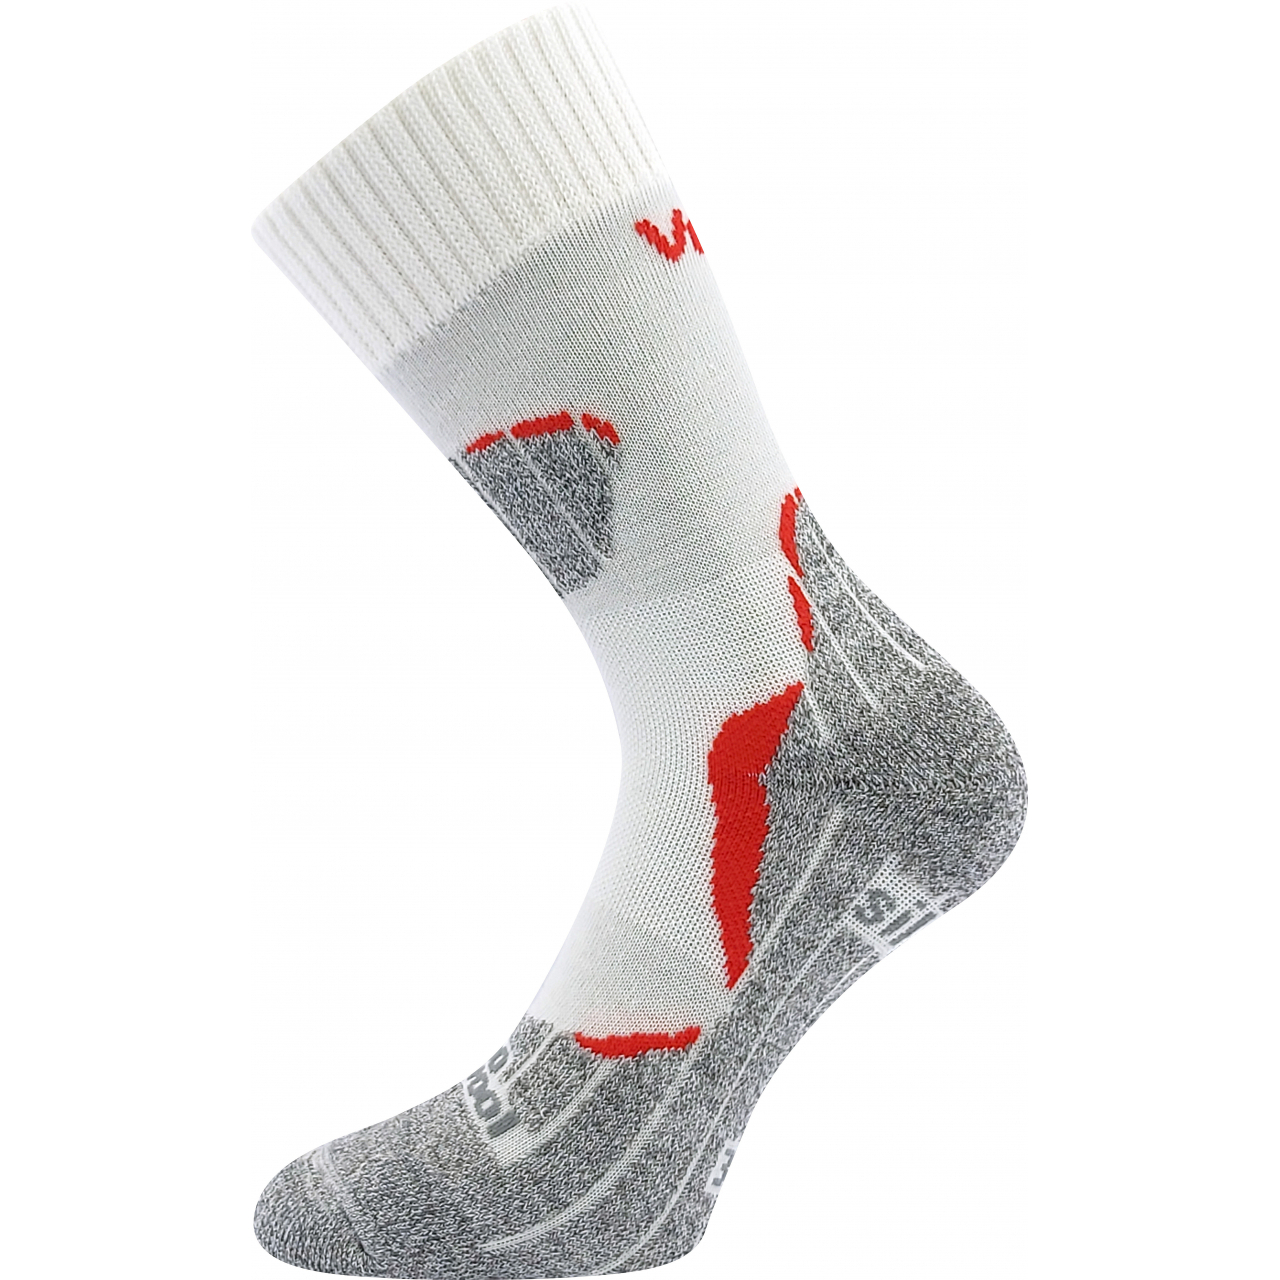 Ponožky unisex termo Voxx Dualix - bílé-šedé, 35-38